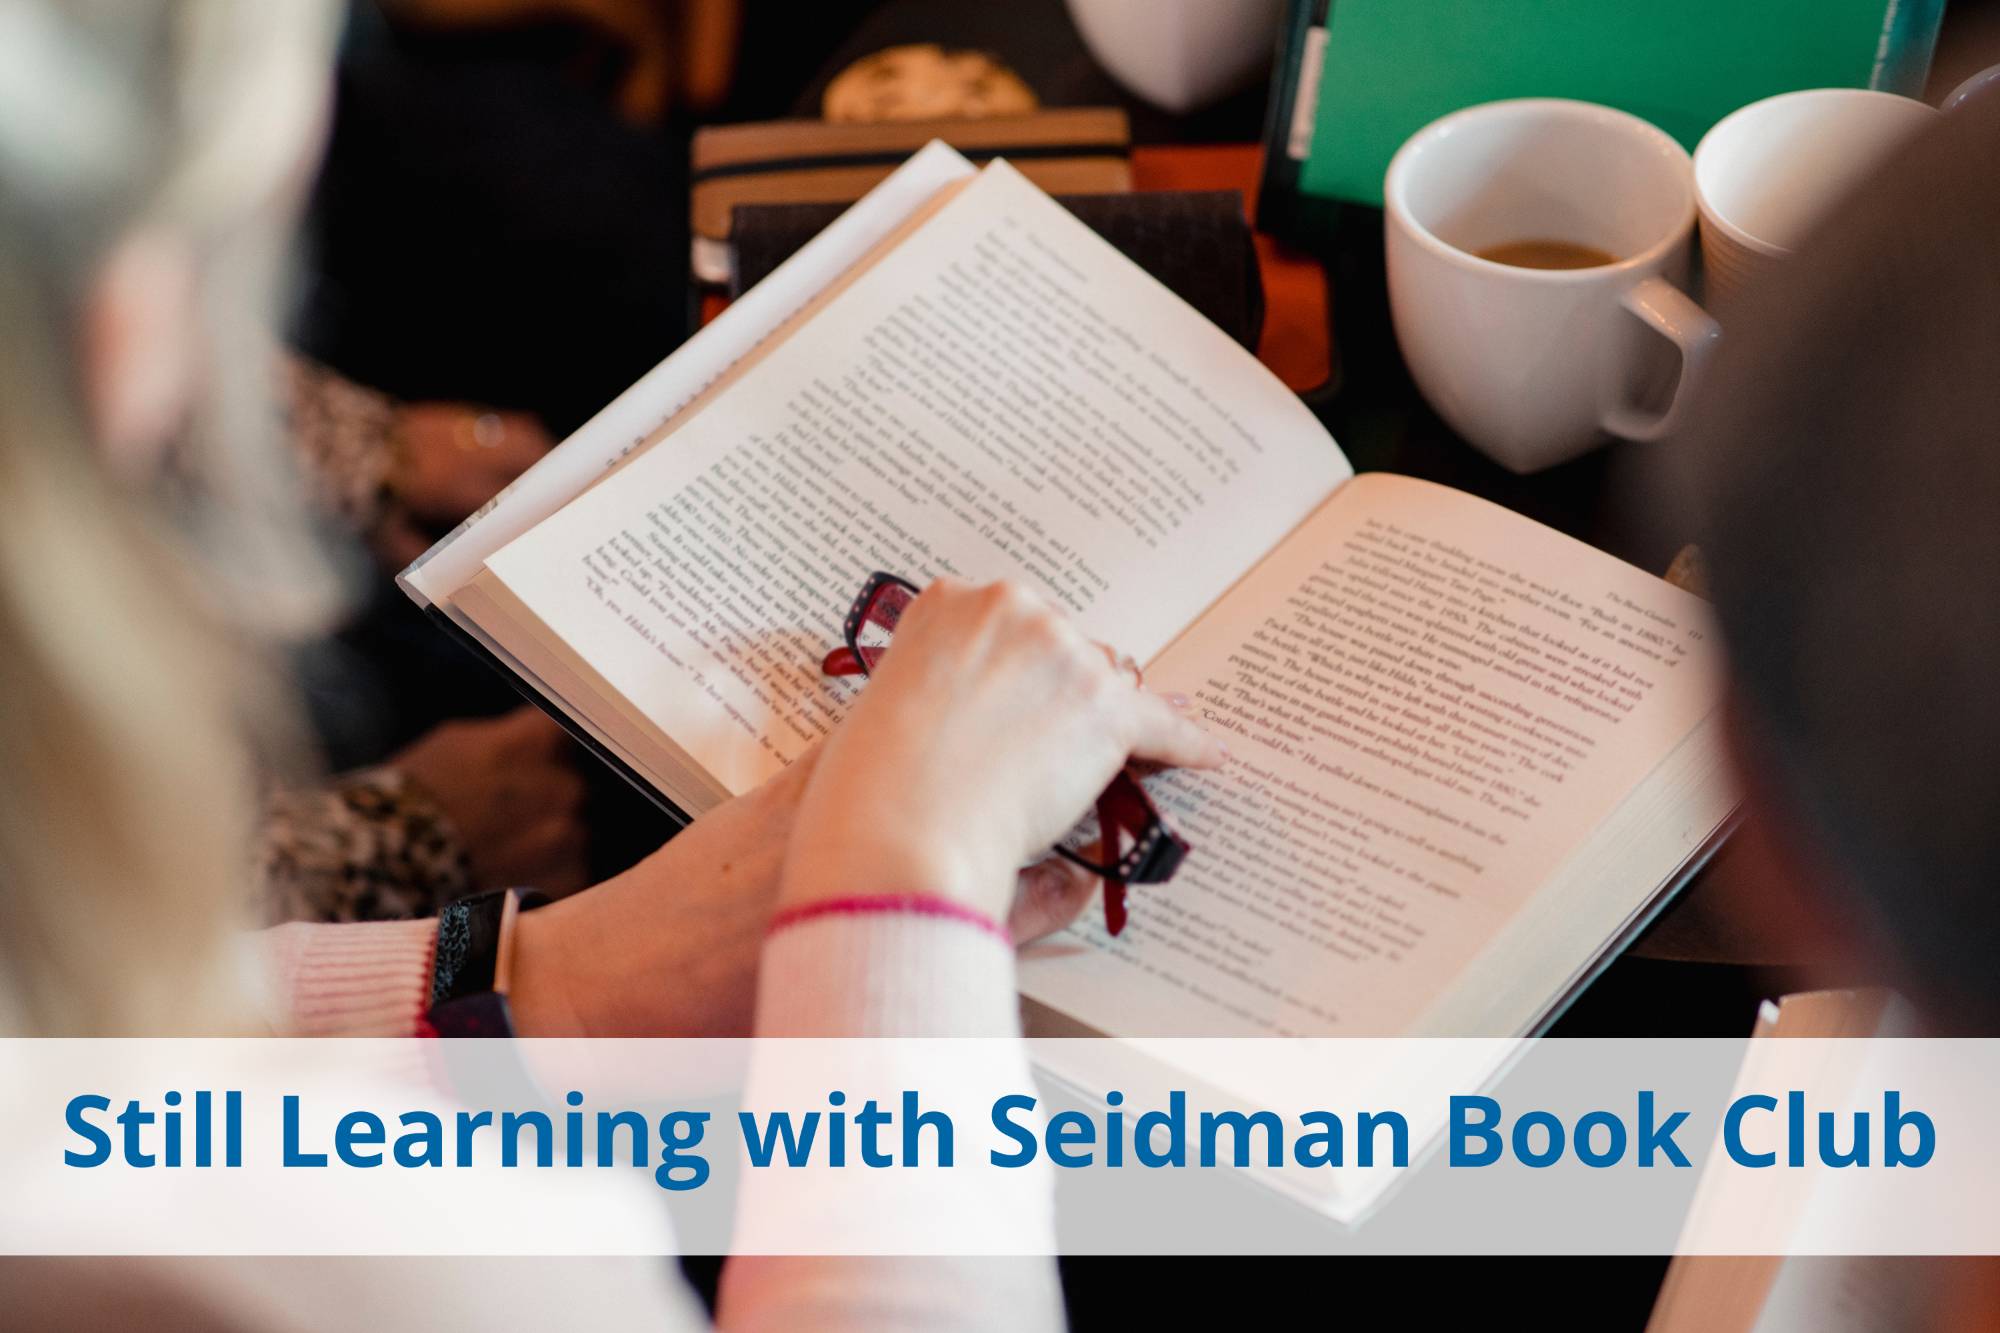 Still learning with Seidman book club